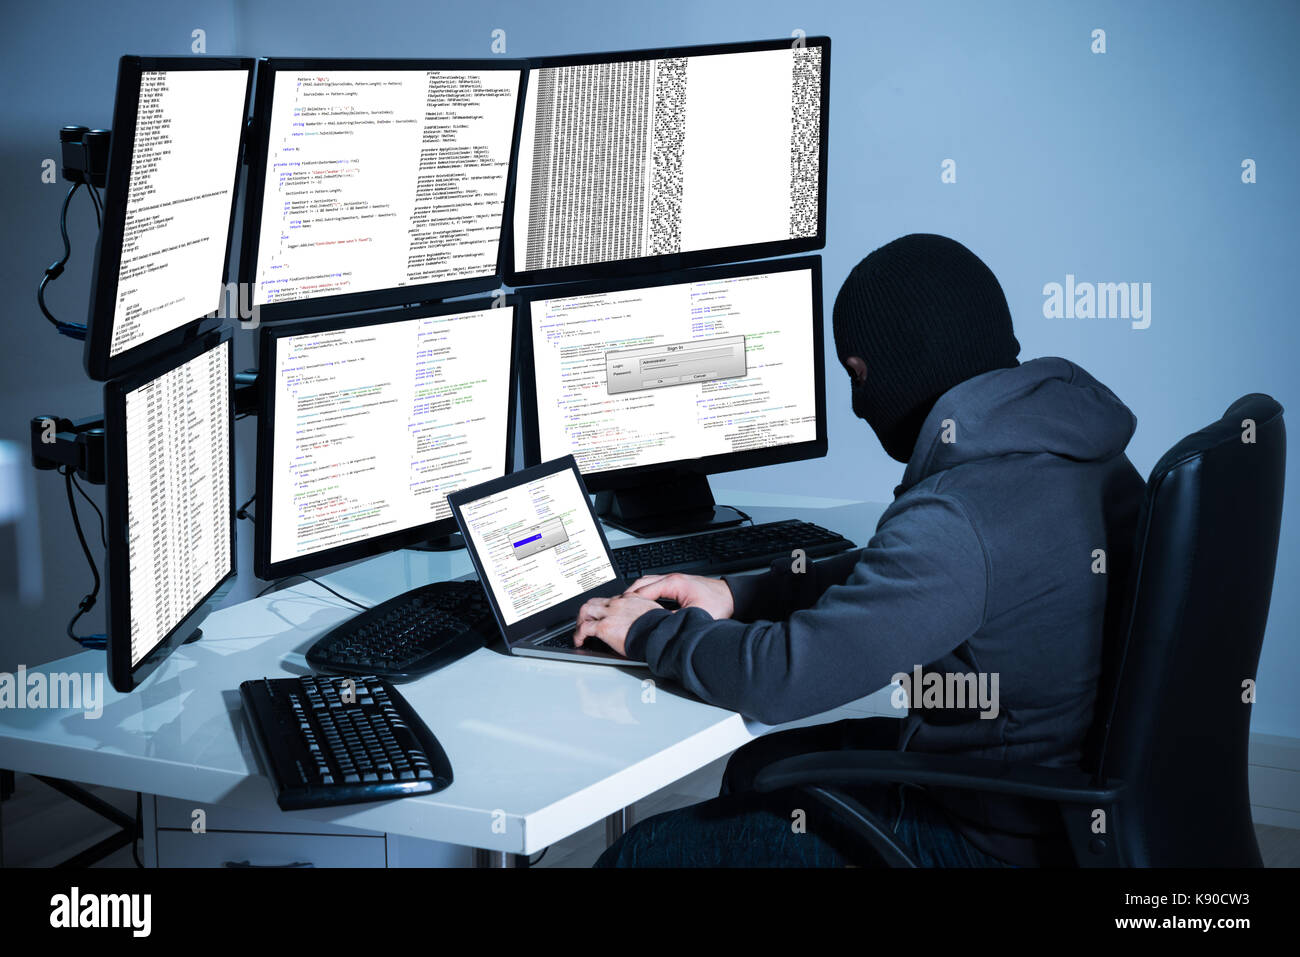 Male Hacker Using Laptop Against Multiple Monitors At Desk In